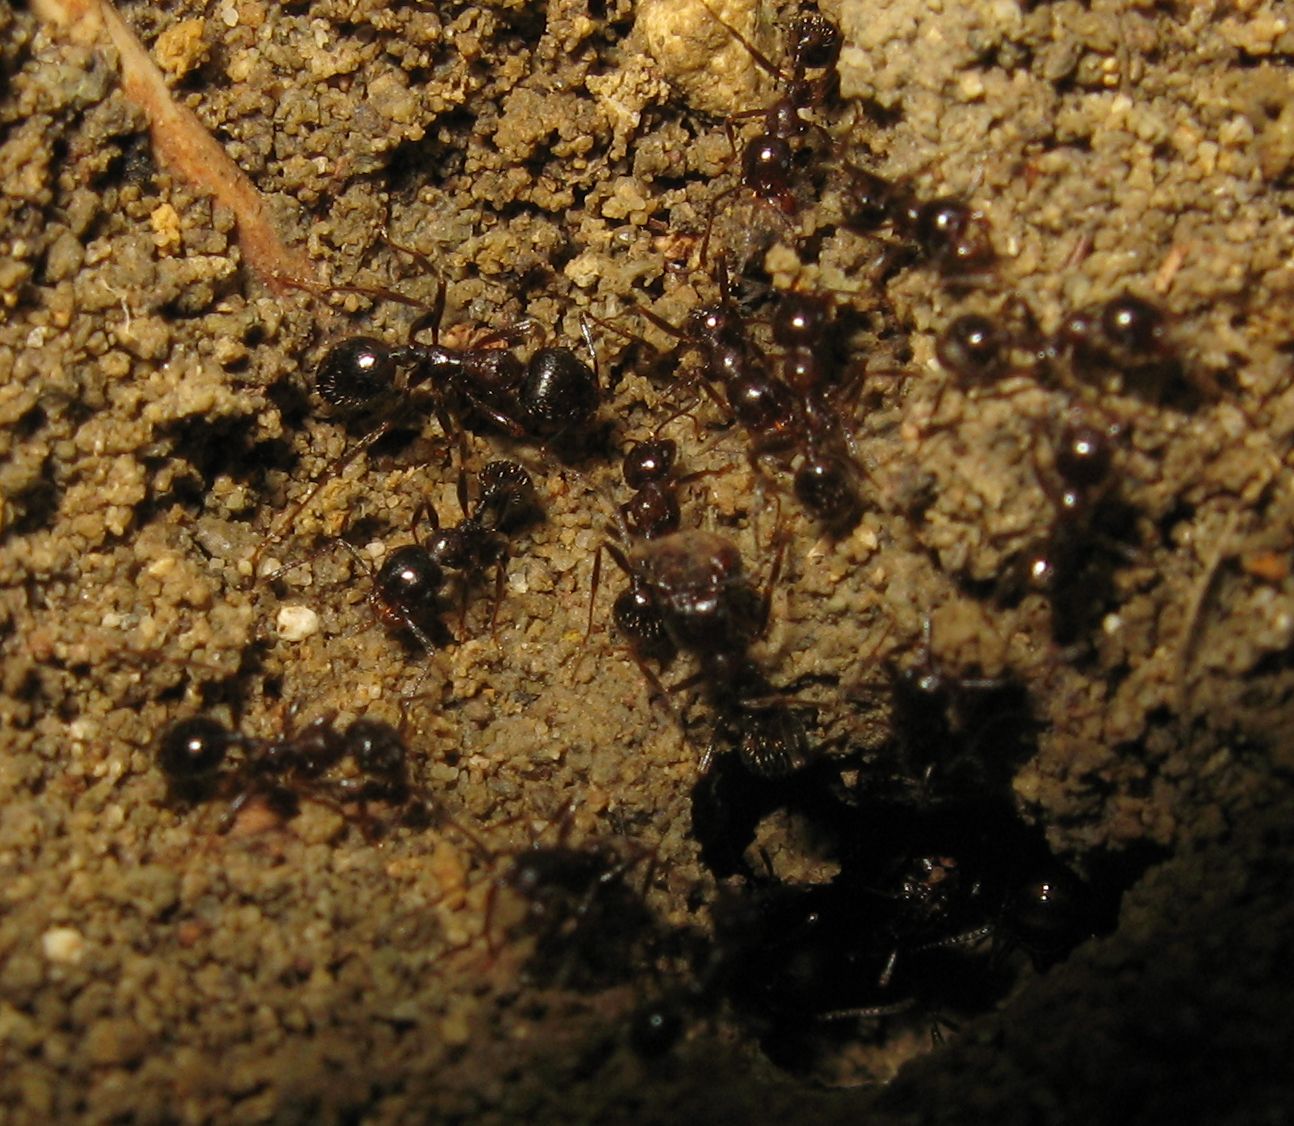 Messor structor, Formicidae